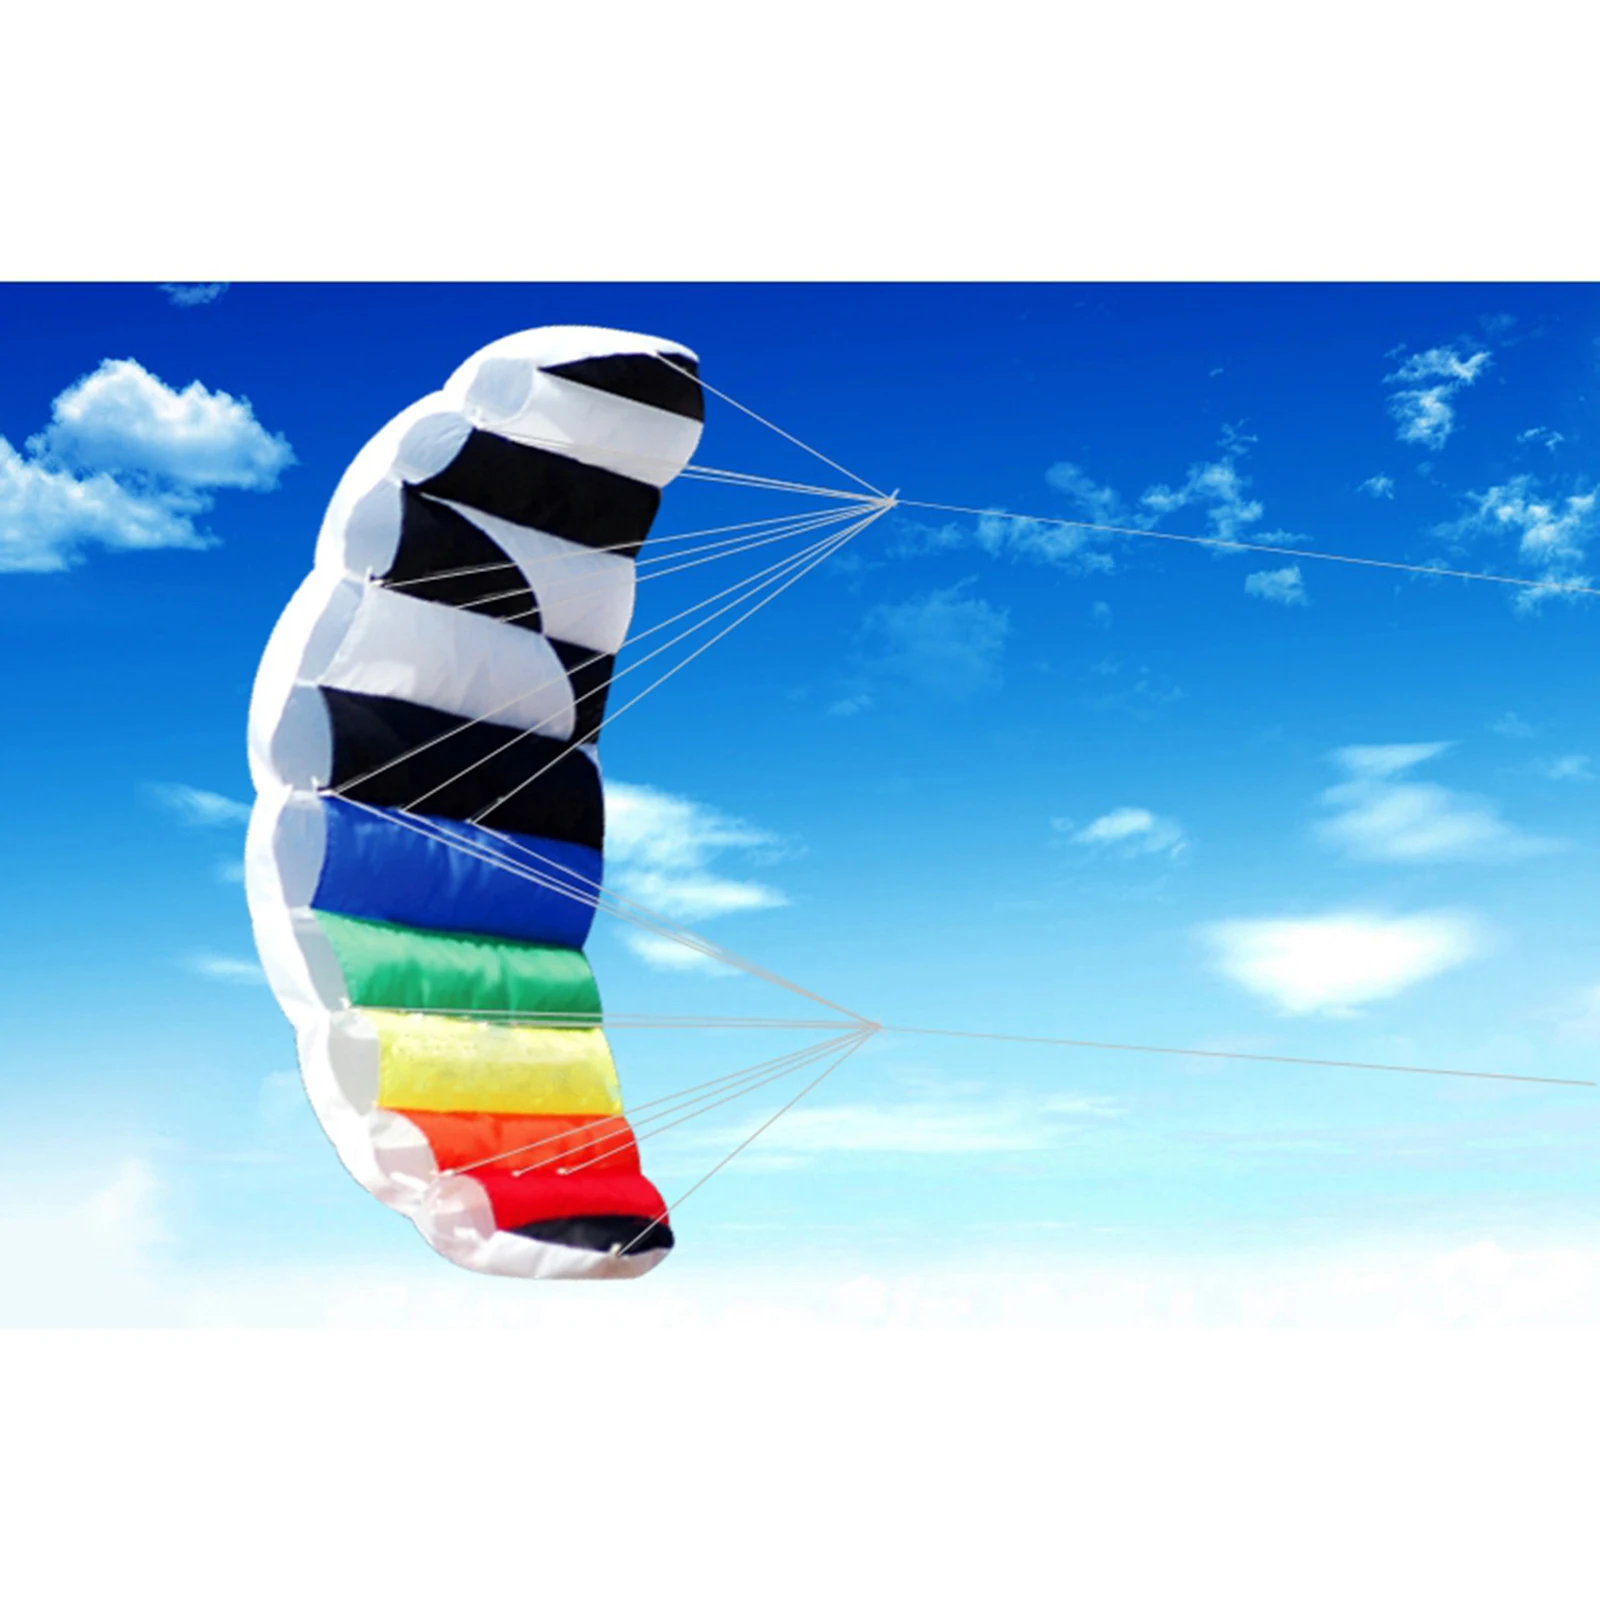 Stunt Power Kite Surfbrett Dual-Linie Kitesurfen Parafoil Sommer Fallschirm 